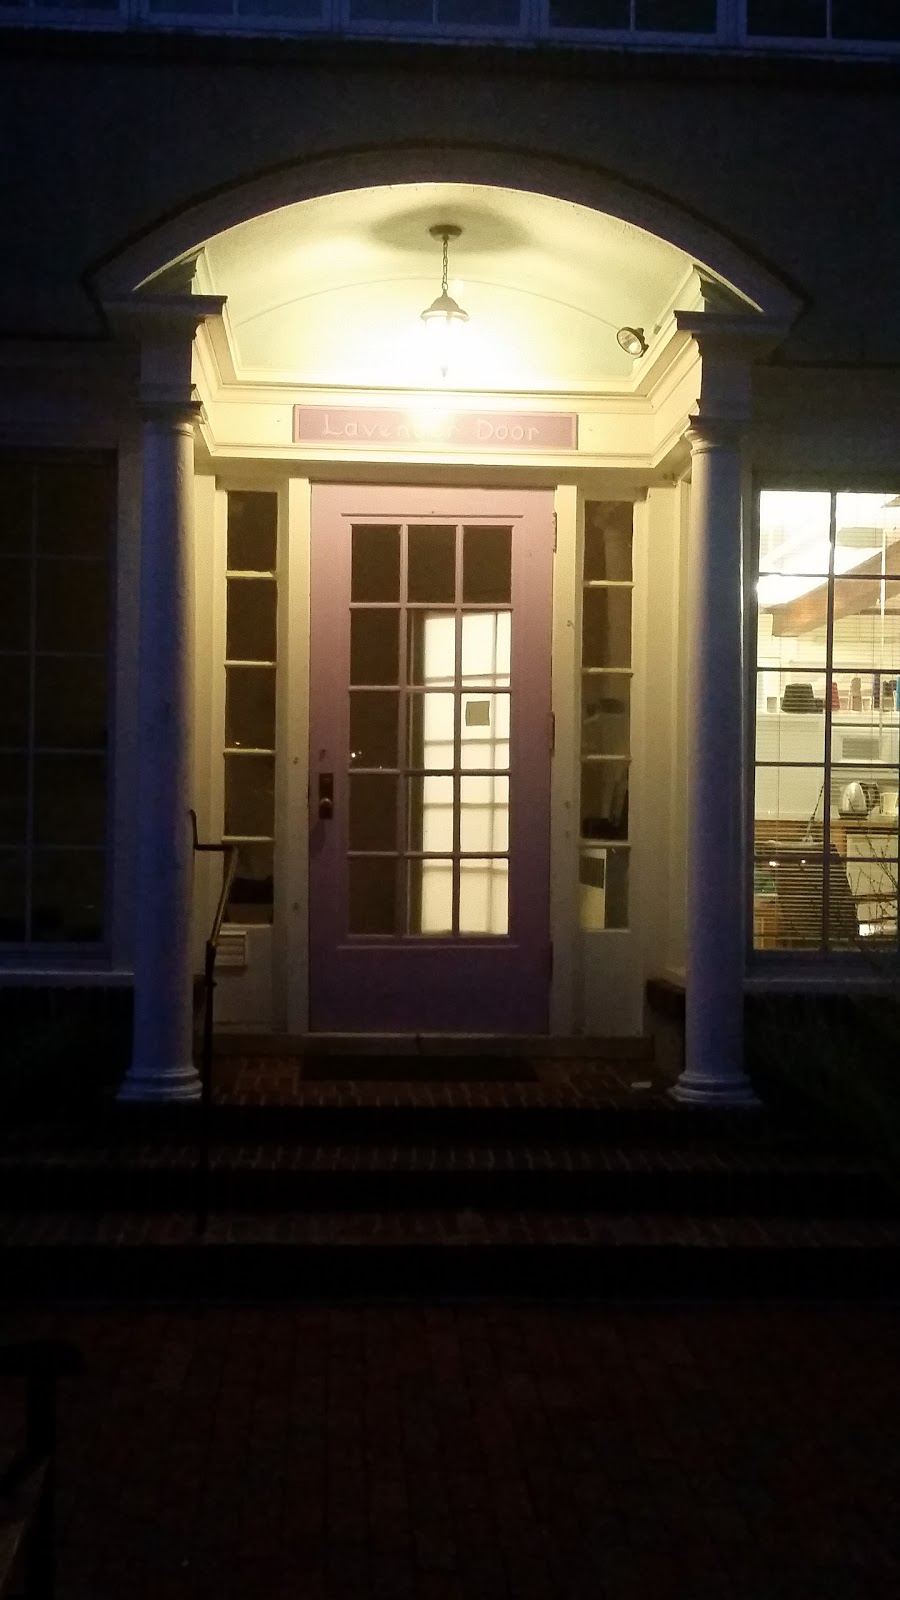 The Lavender Door Gallery | 37 Main St, Stockbridge, MA 01262 | Phone: (413) 931-5317